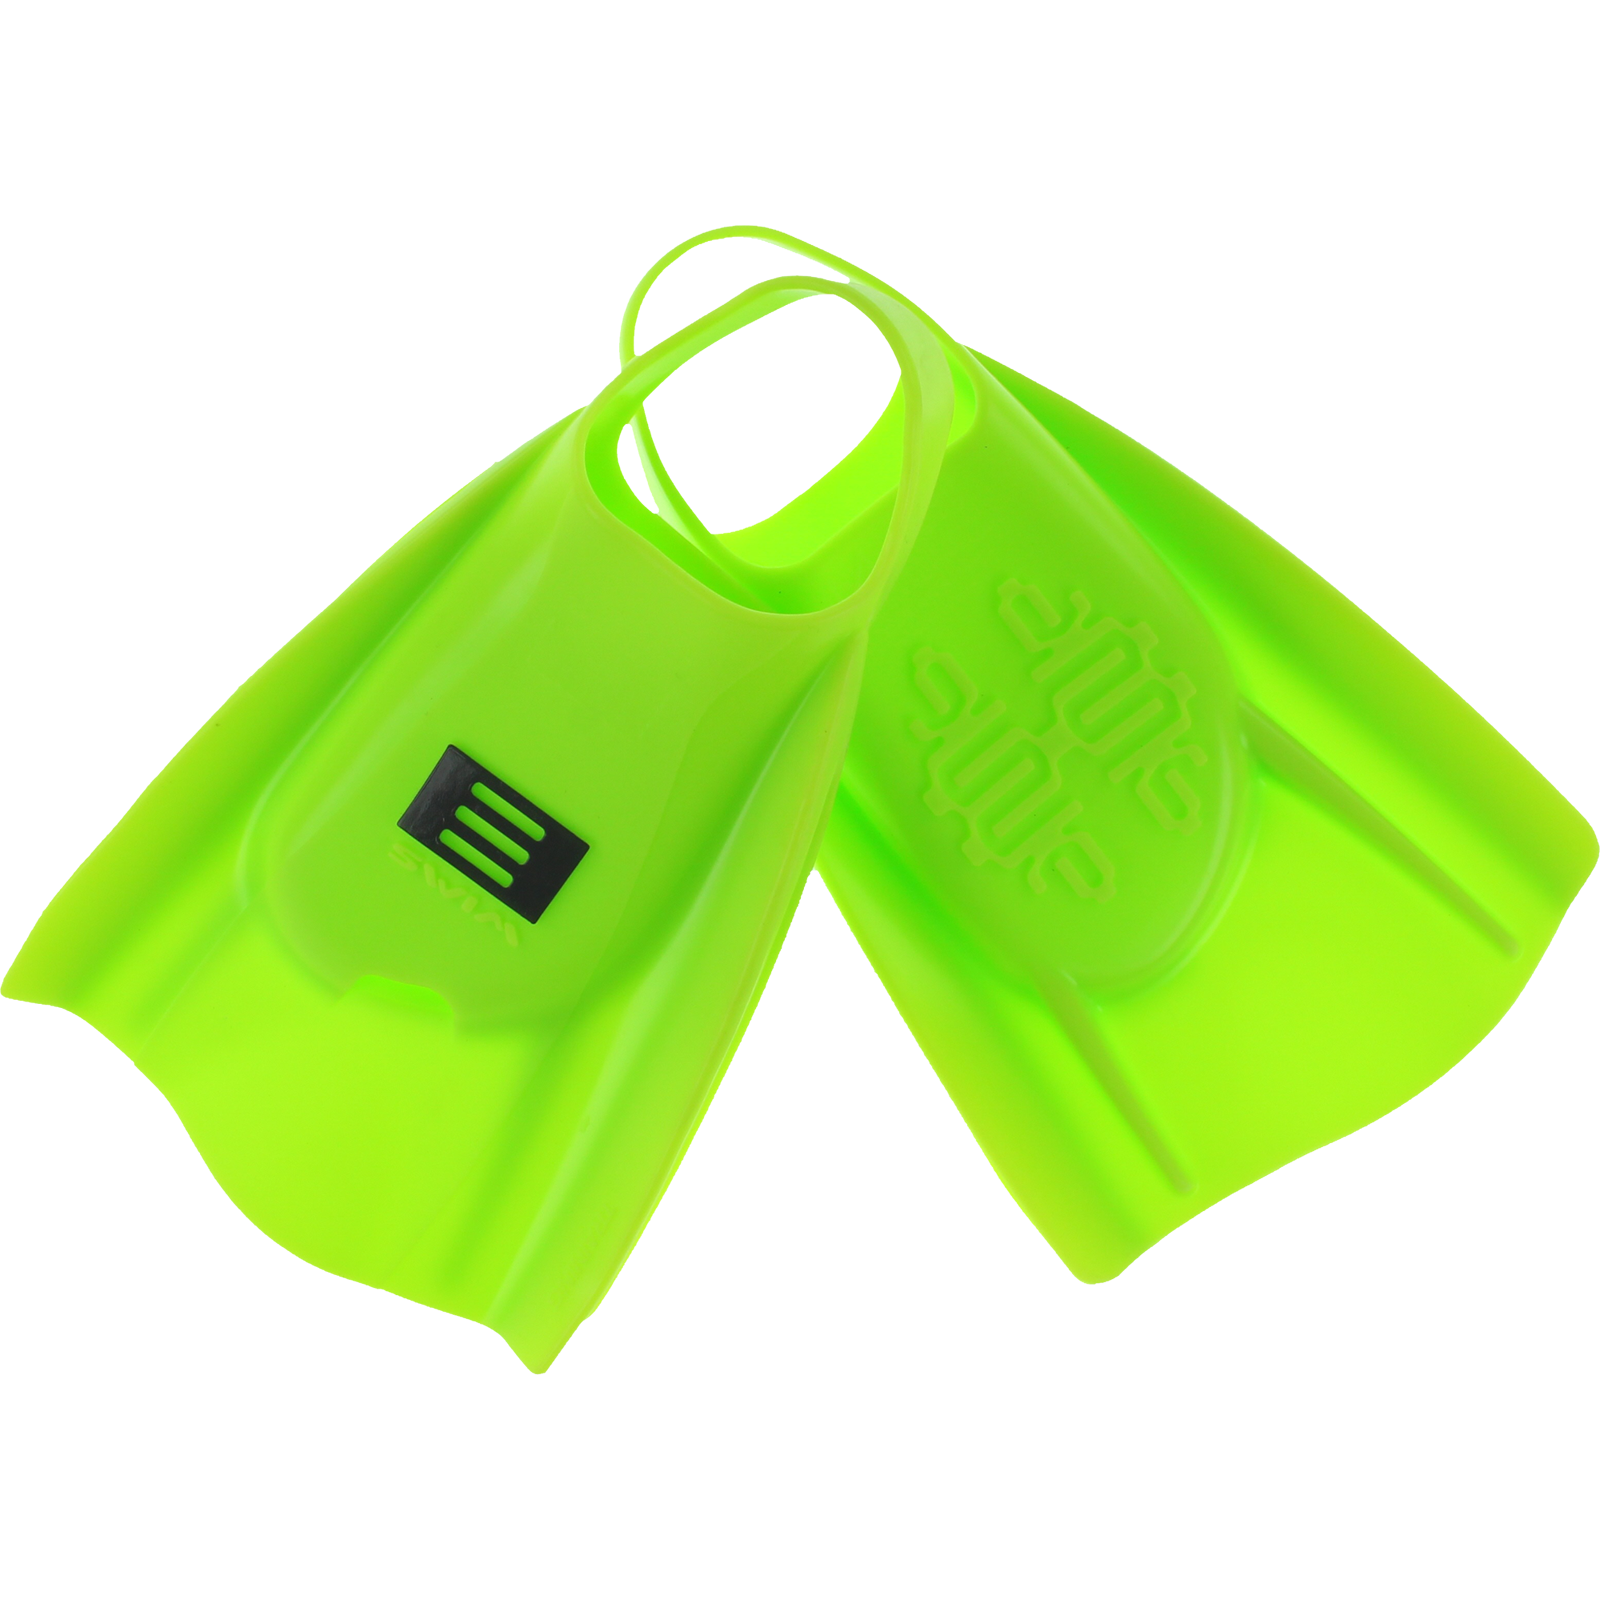 DMC Elite Swim Fins - MEDIUM Neon Green (Size 6-7)